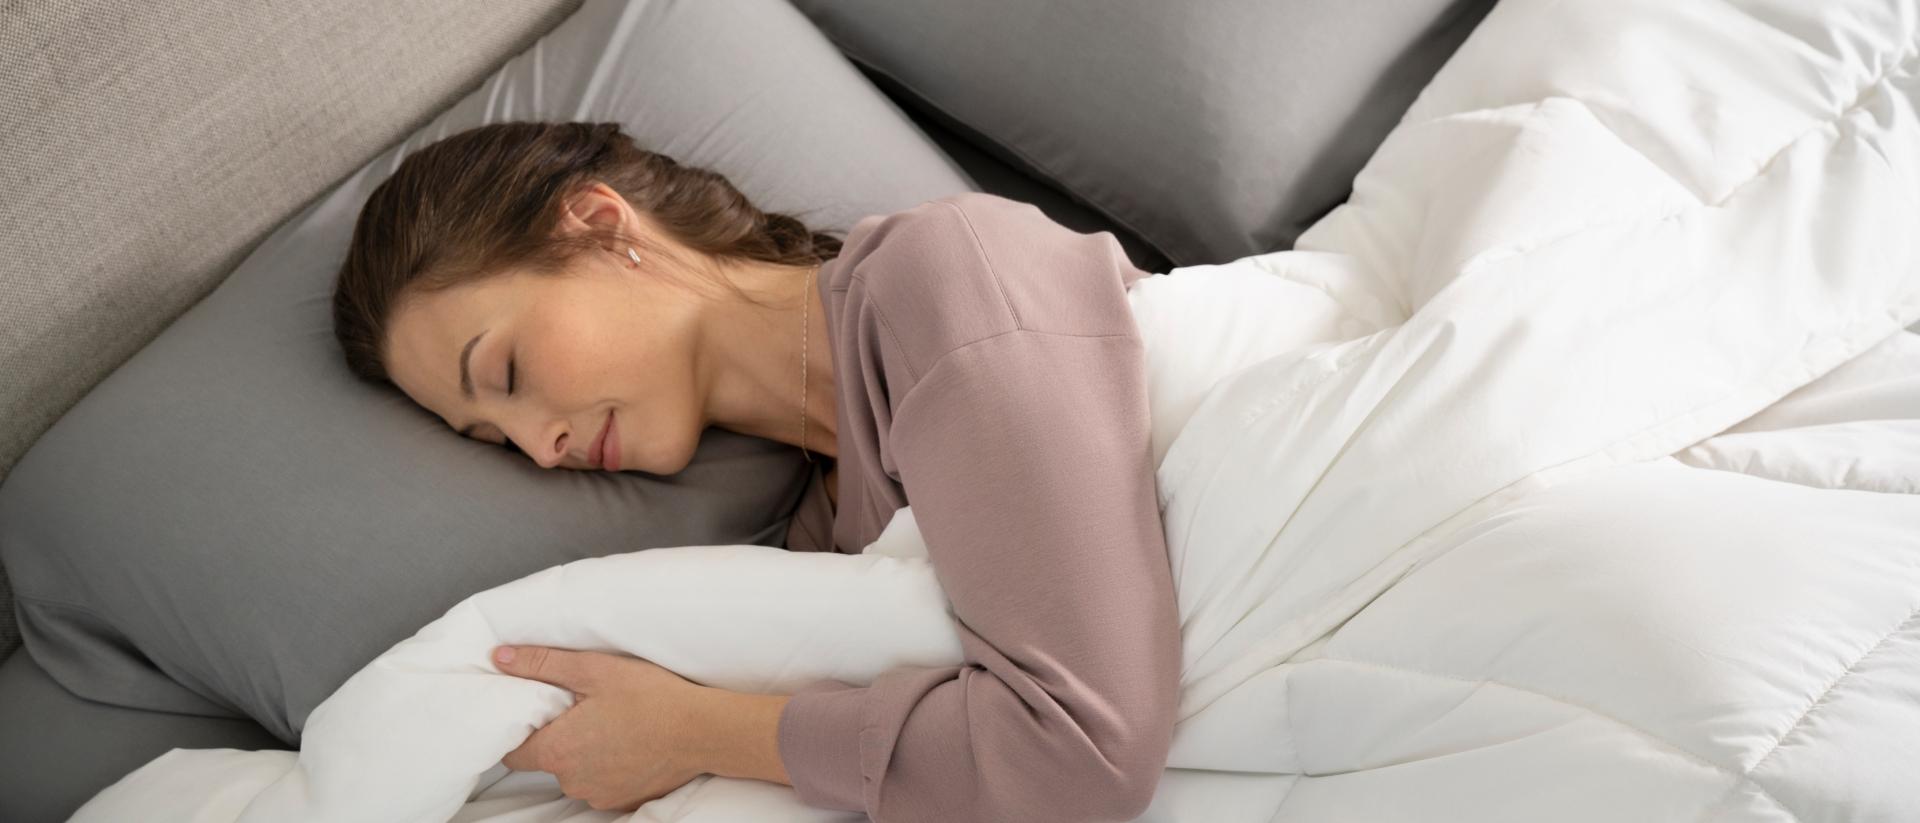 Woman sleeping on a pillow